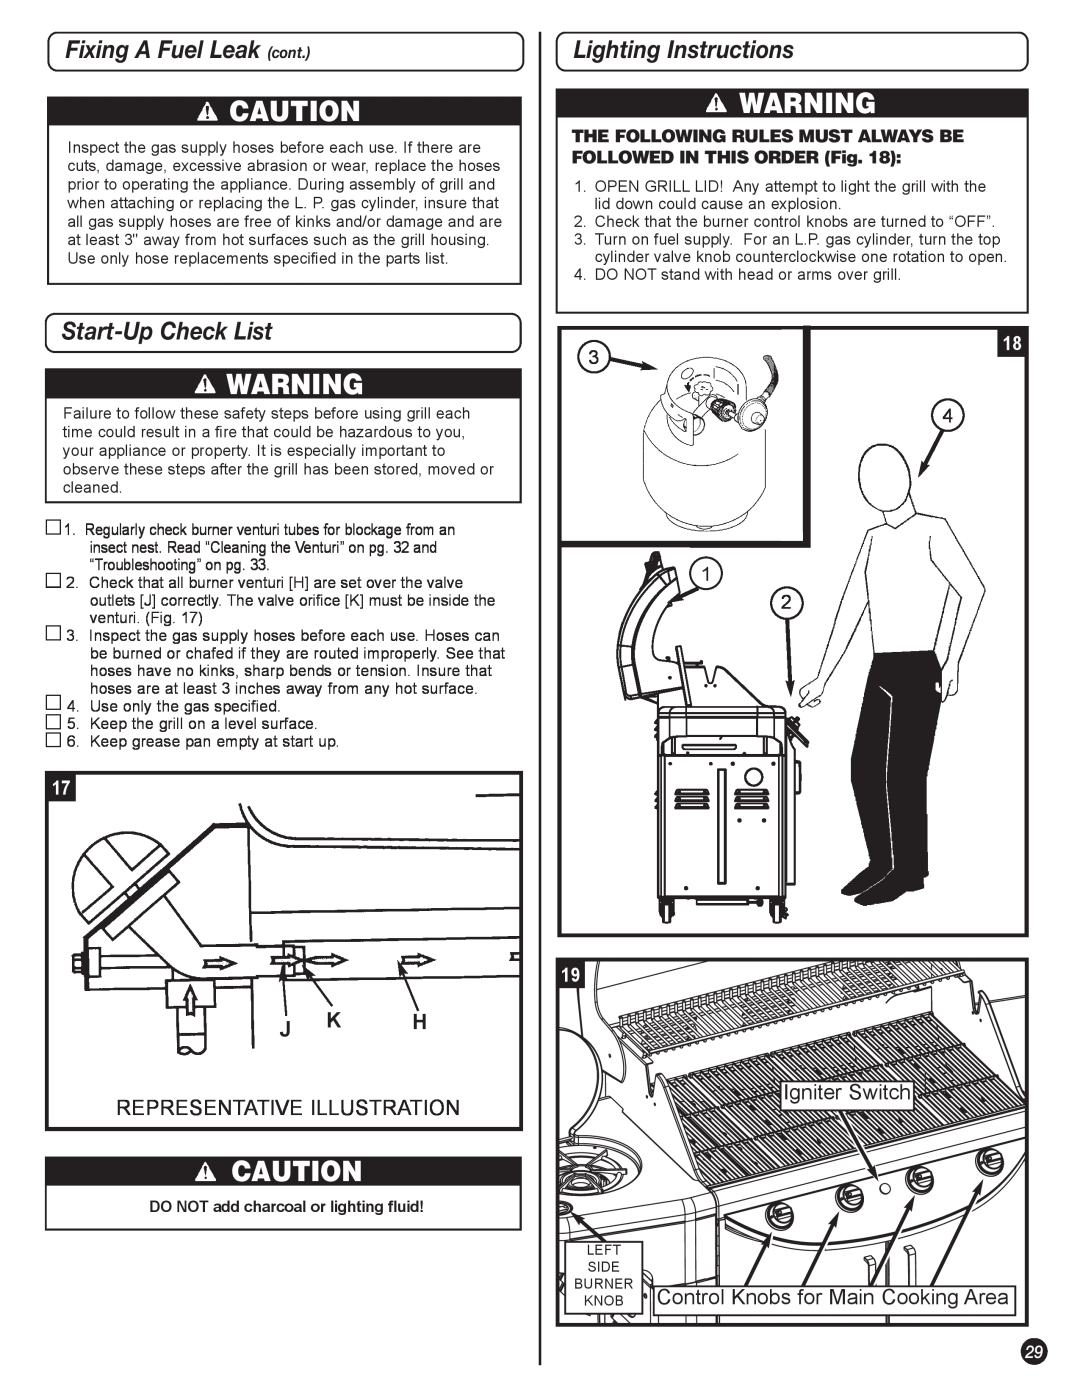 Coleman 5400 LP manual Fixing A Fuel Leak cont, Start-Up Check List, Lighting Instructions, J K H 